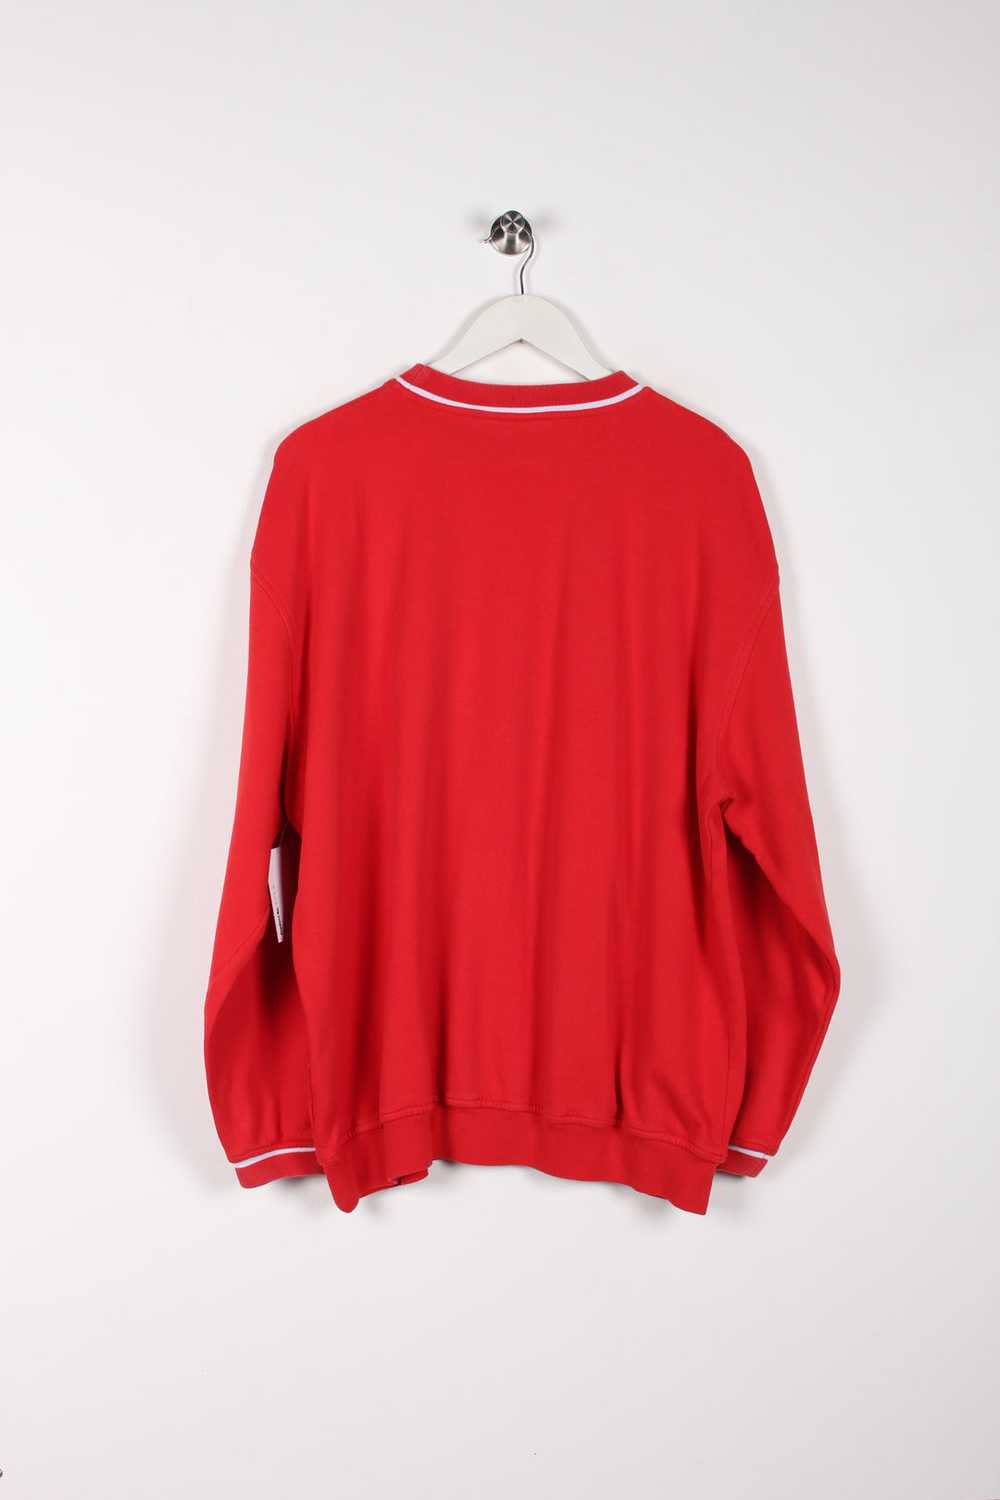 Fila Sweatshirt Red XL - image 4